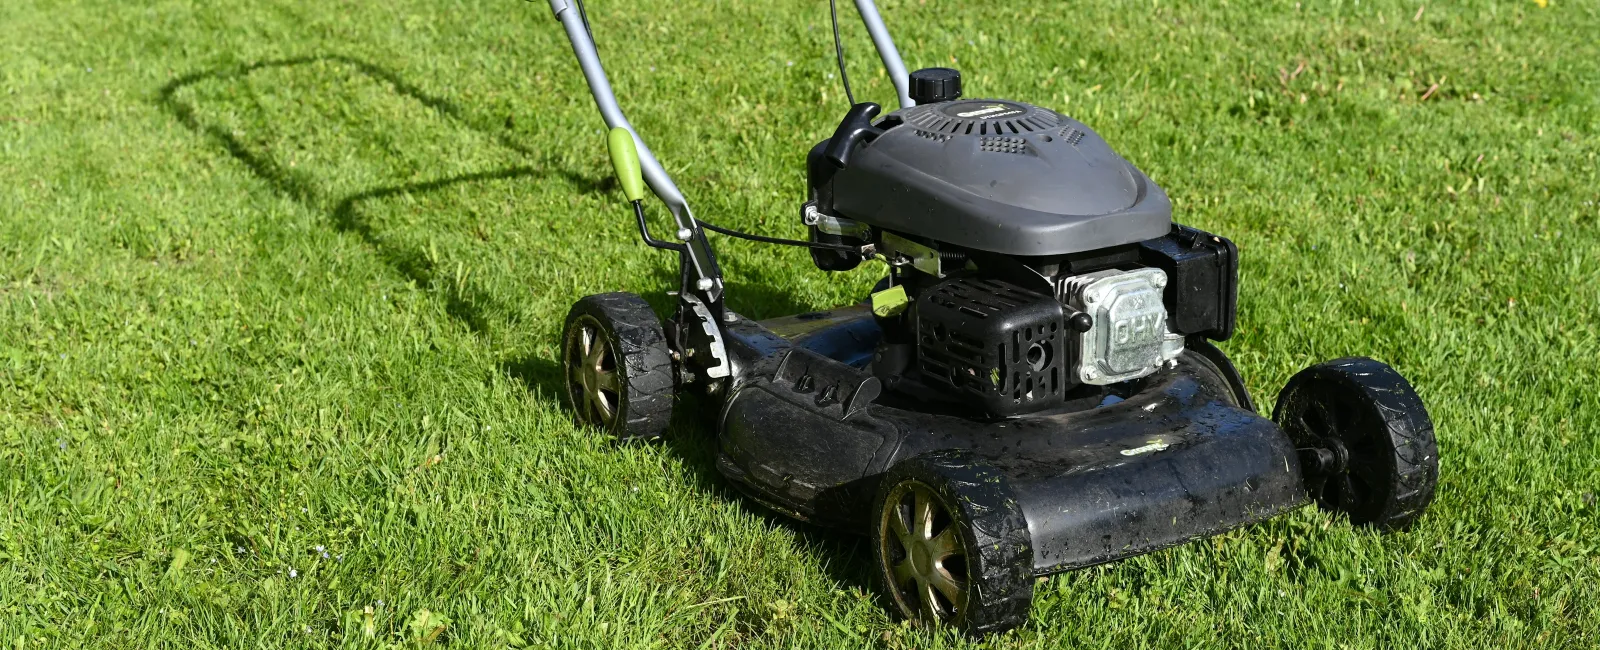 a lawn mower on grass